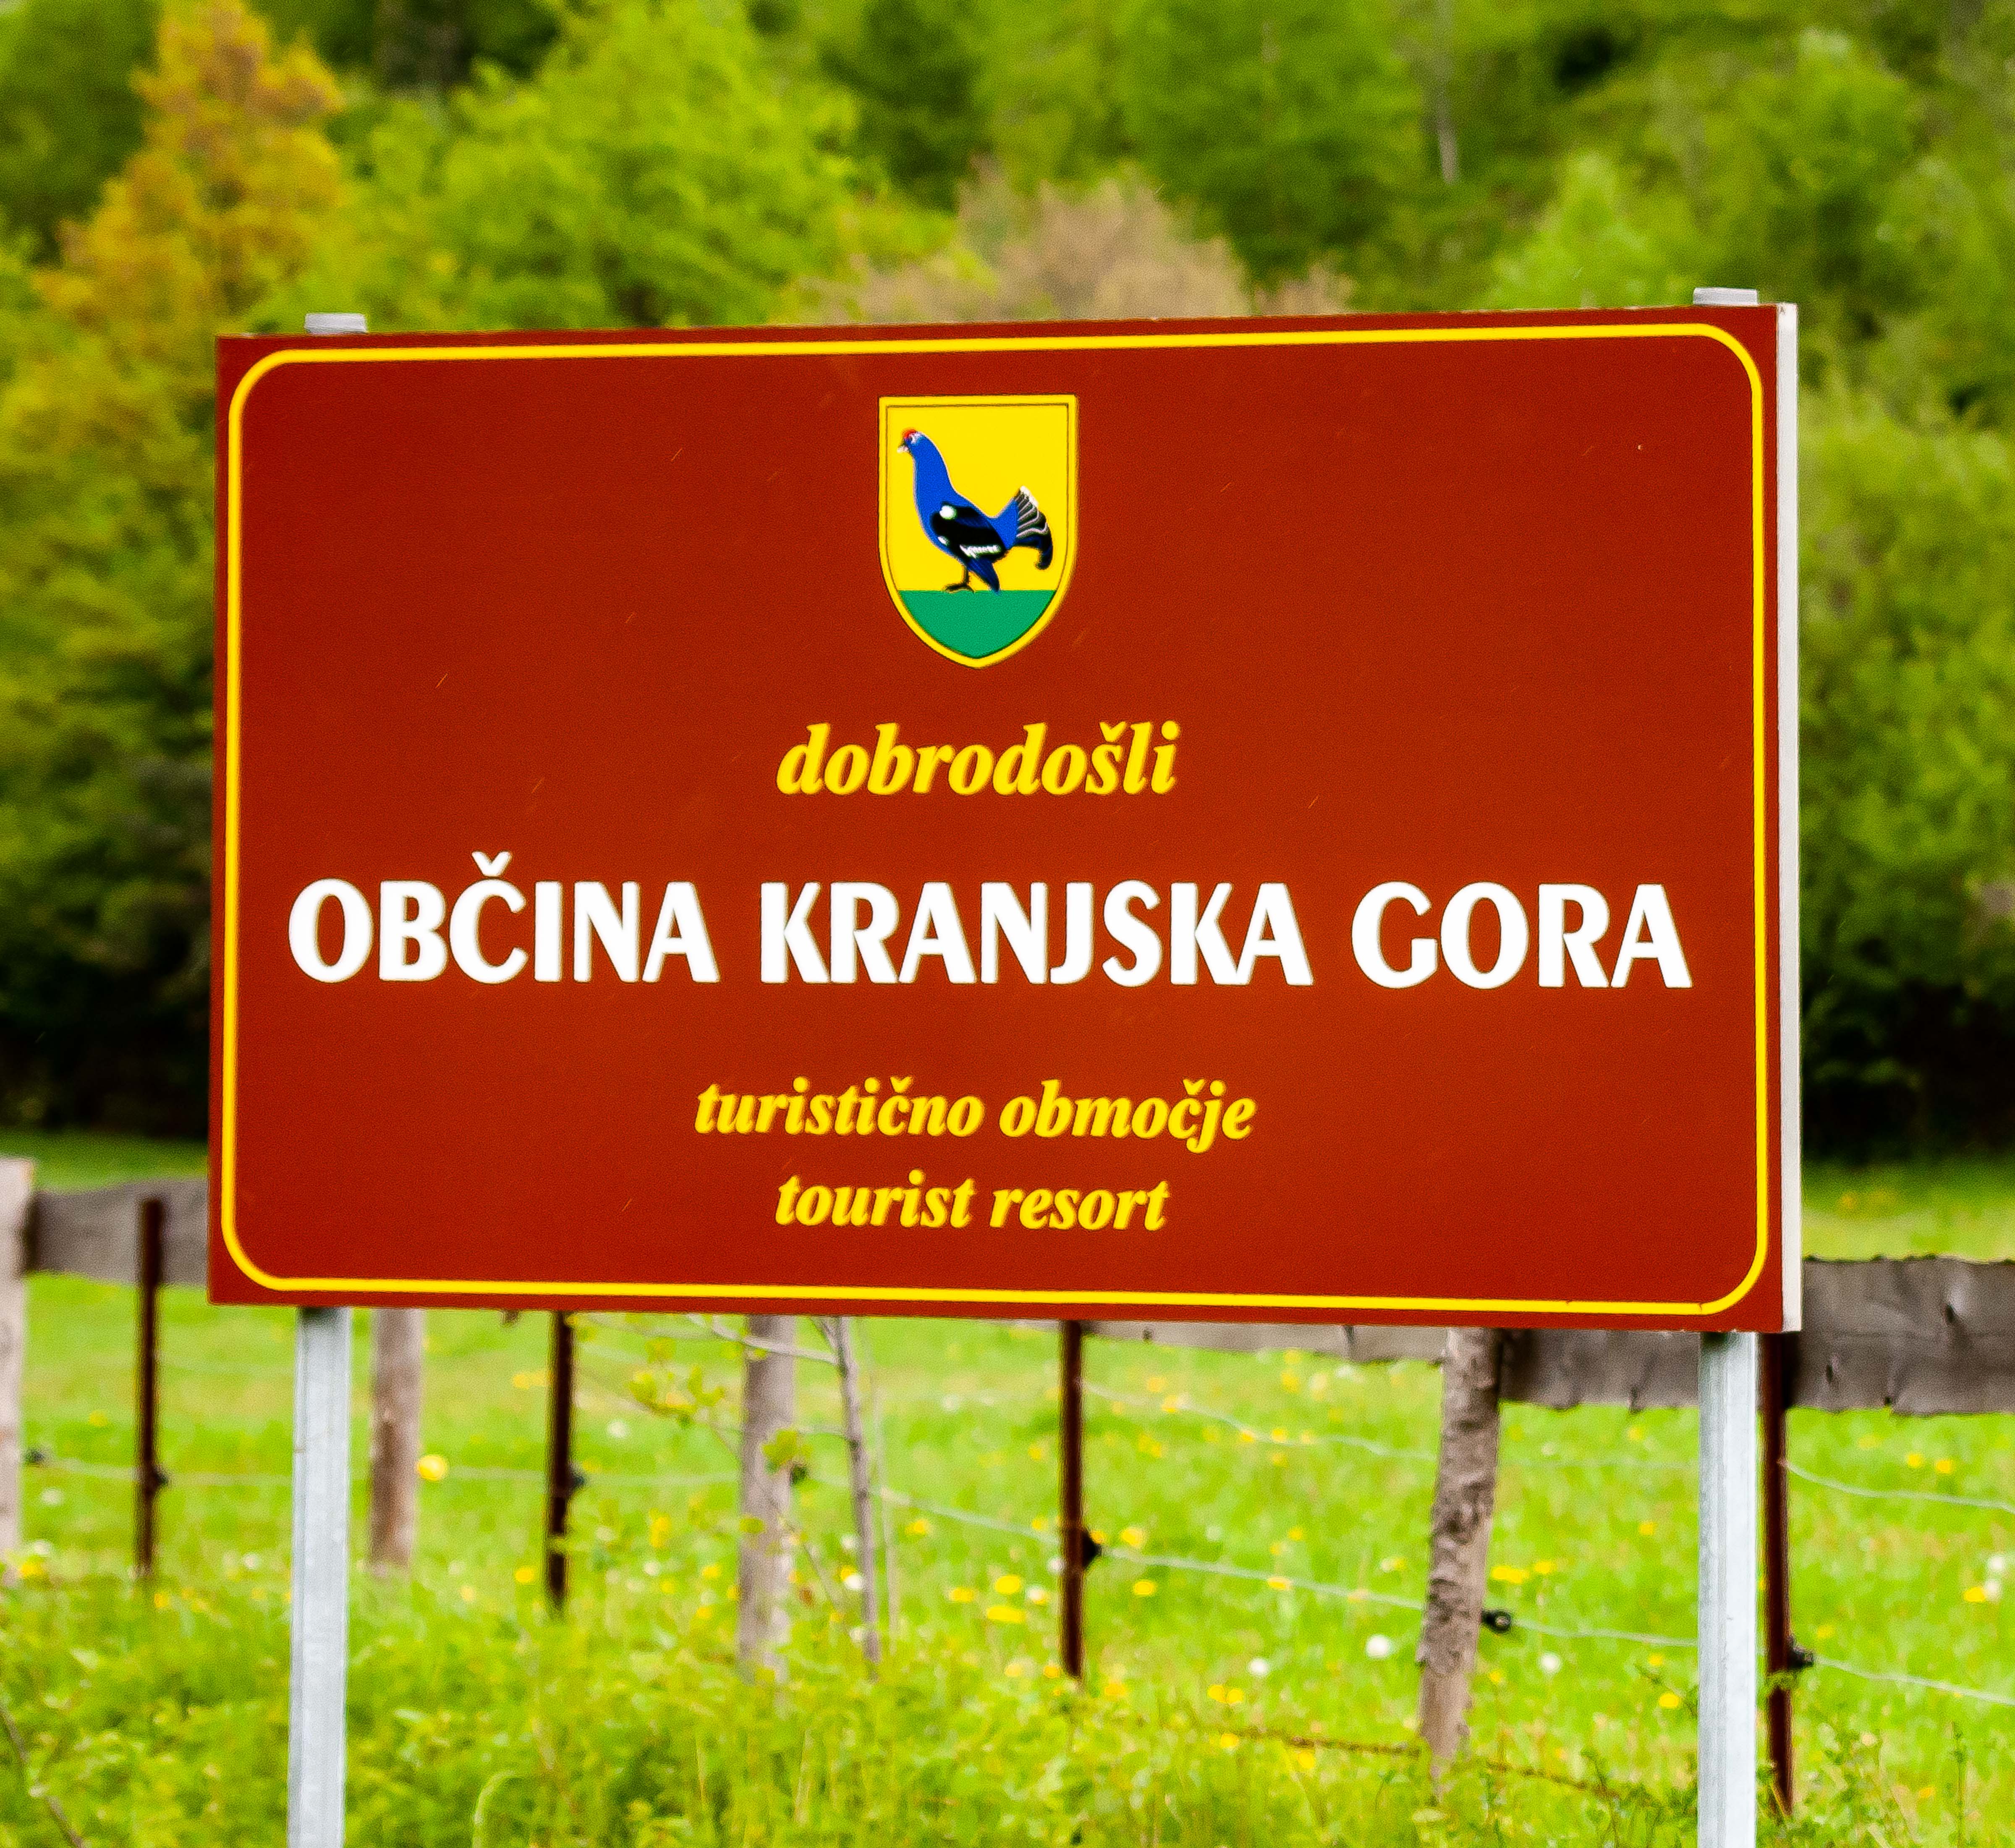 Slovenia, Kranjska Gora Prov, Welcome To Obcina Kranjska Gora, 2006, IMG 6475